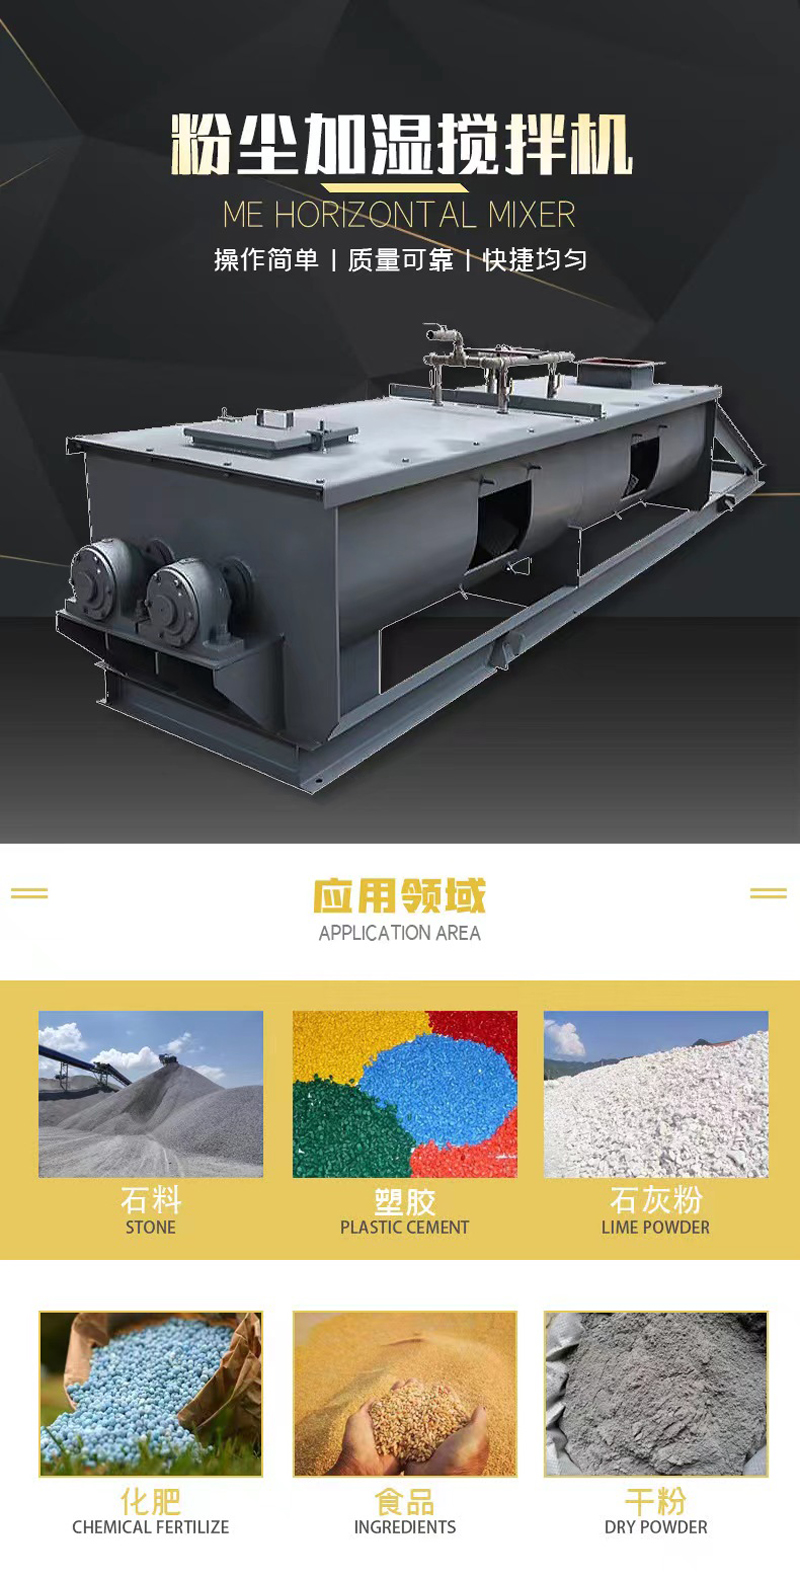 Xinjunze Industrial Double axis Dust Humidification Mixer Horizontal Dry Powder Mixer